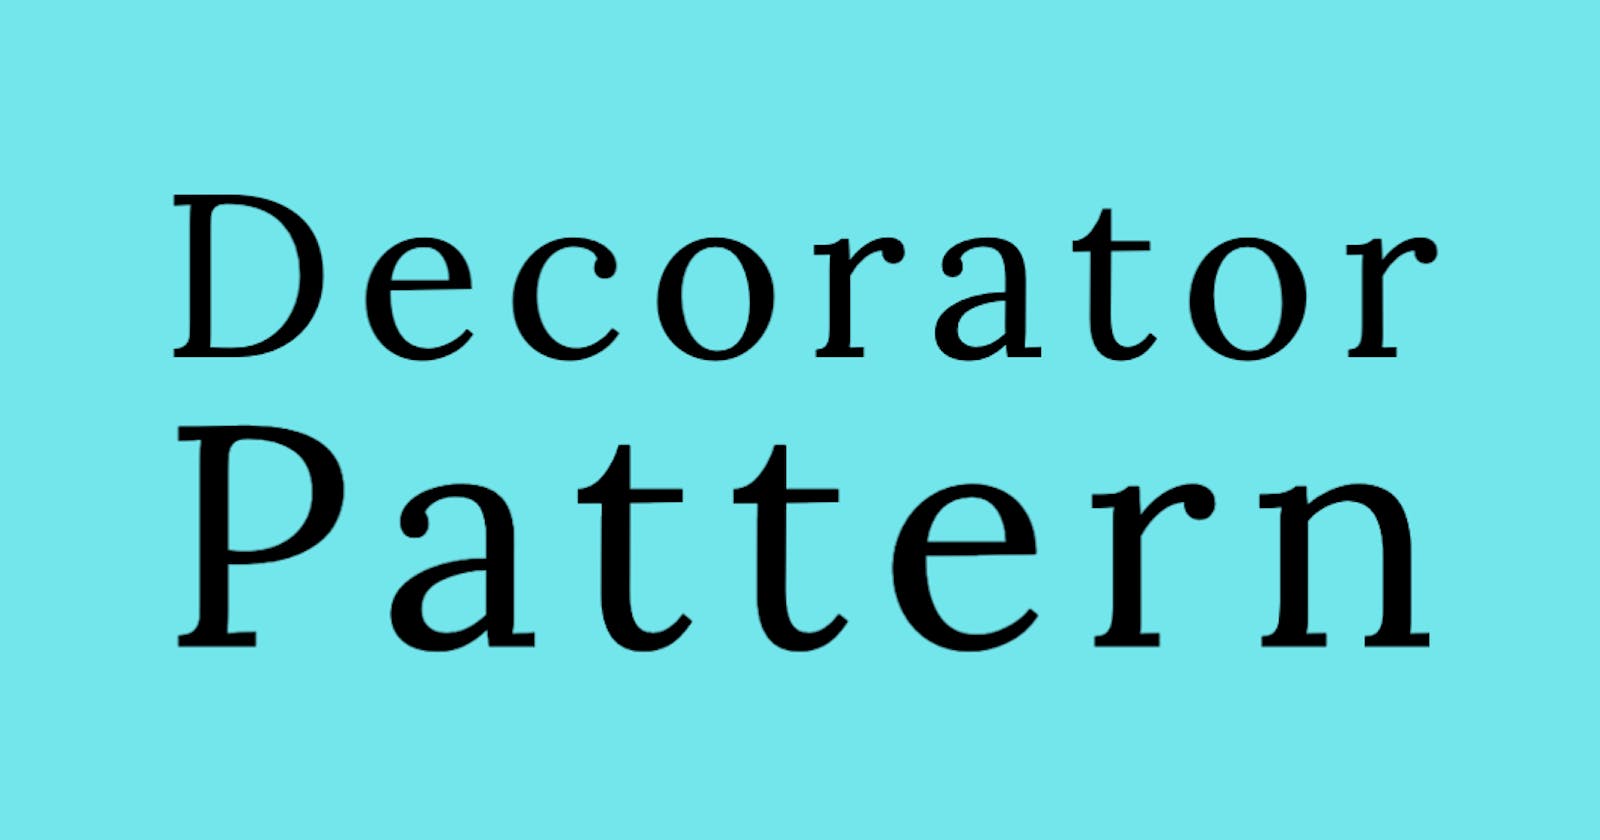 Notes: Go Design Patterns - Decorator Pattern